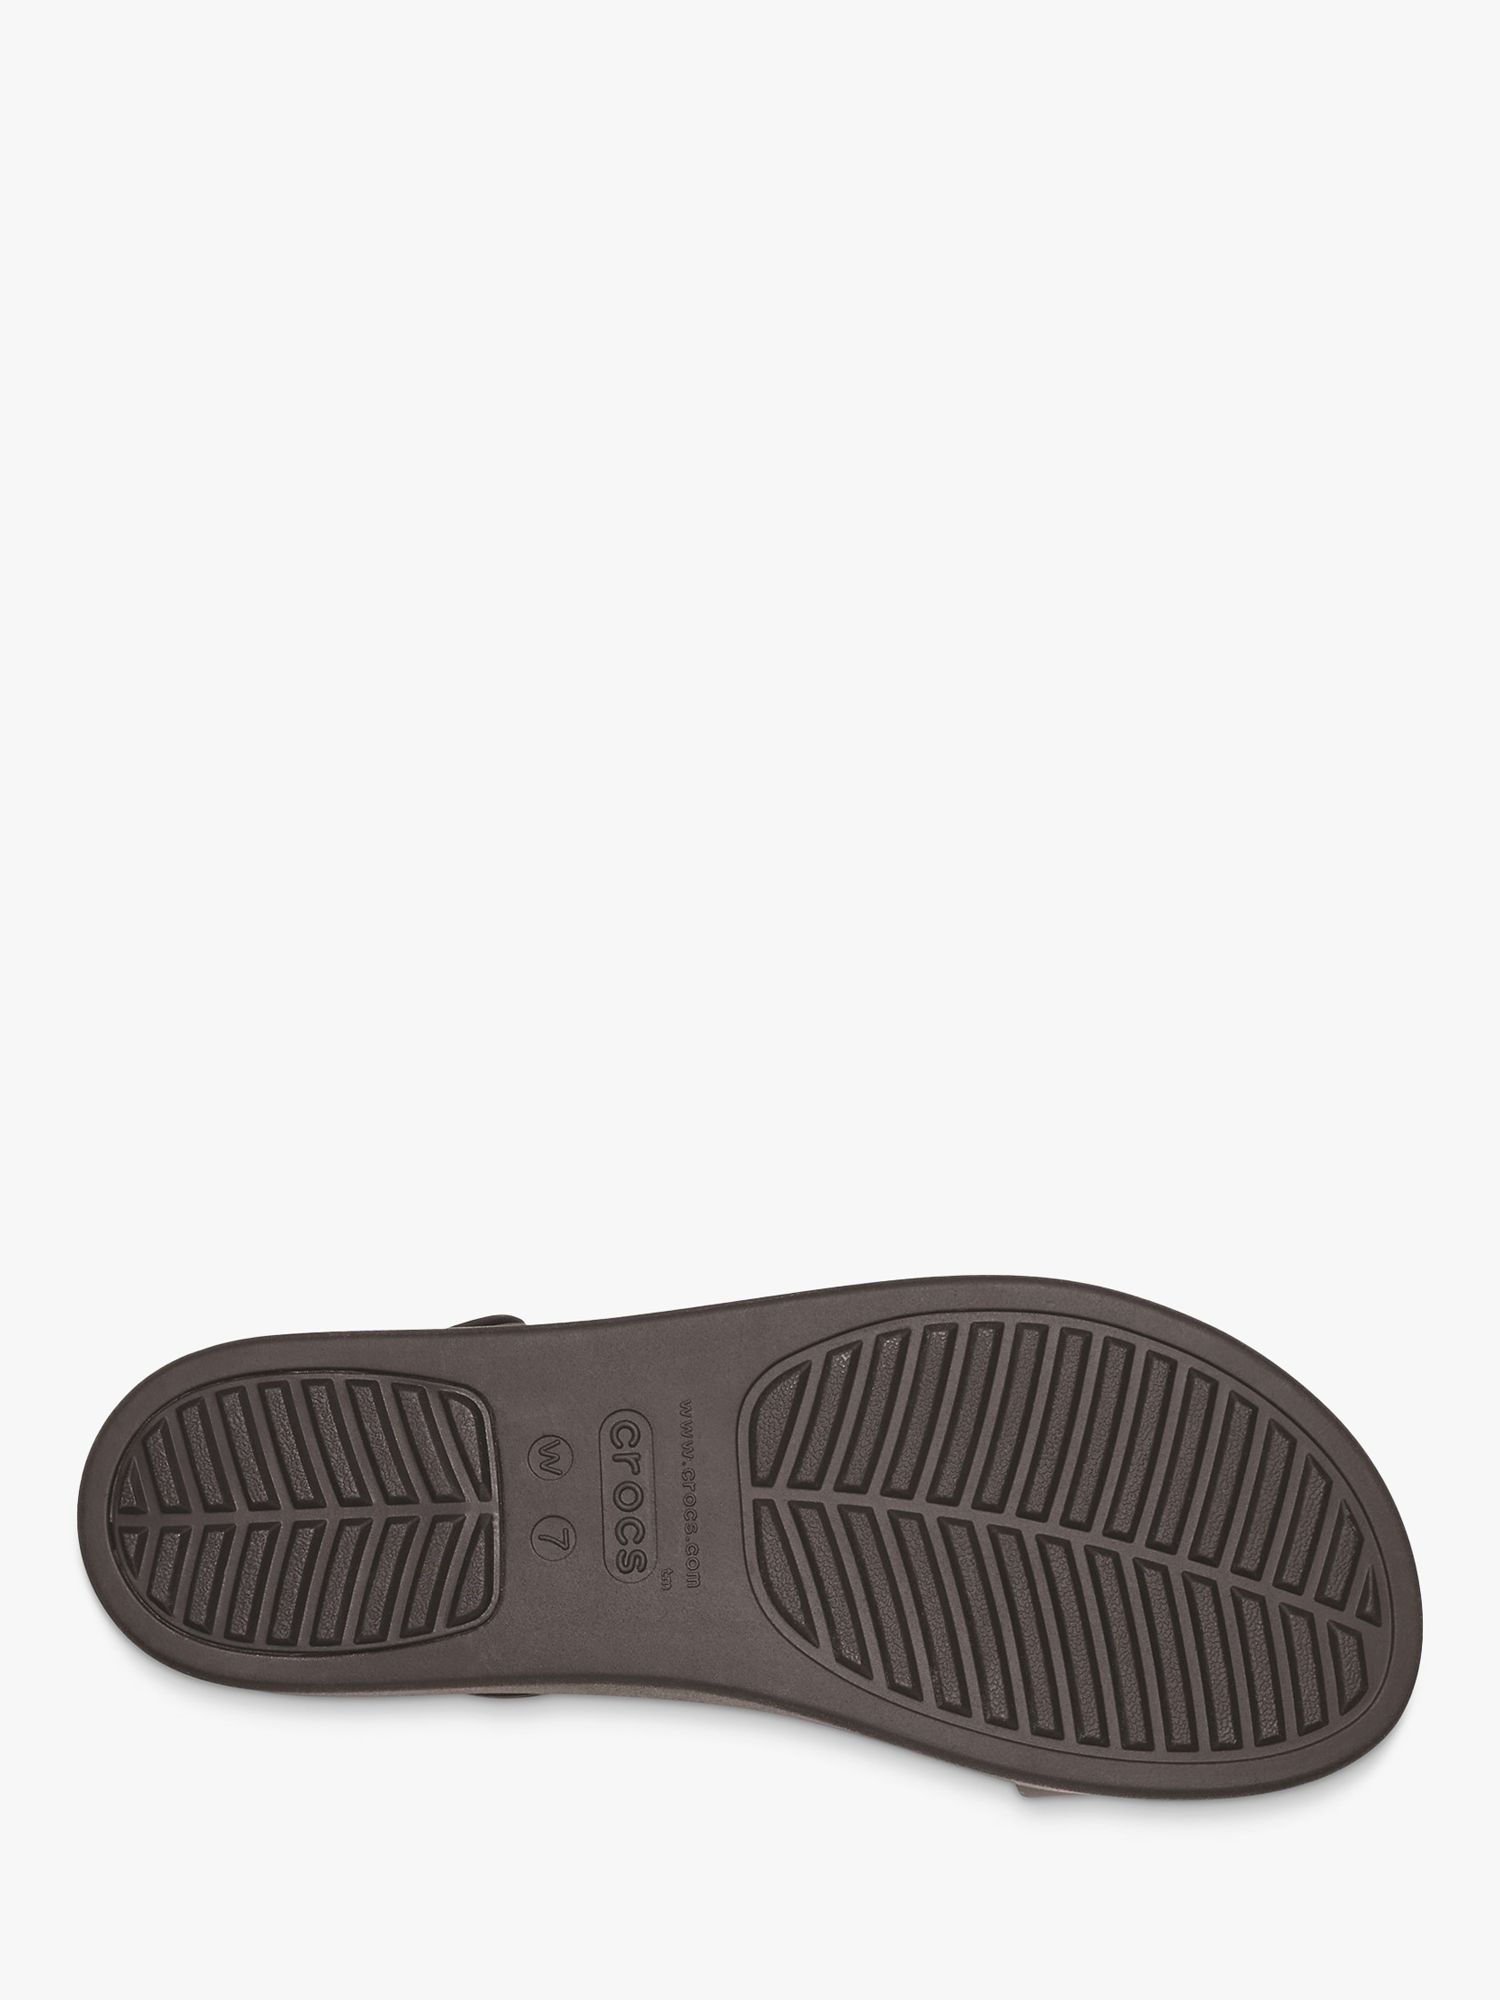 Crocs Brooklyn Low Wedge Platform Sandals, Black, 4